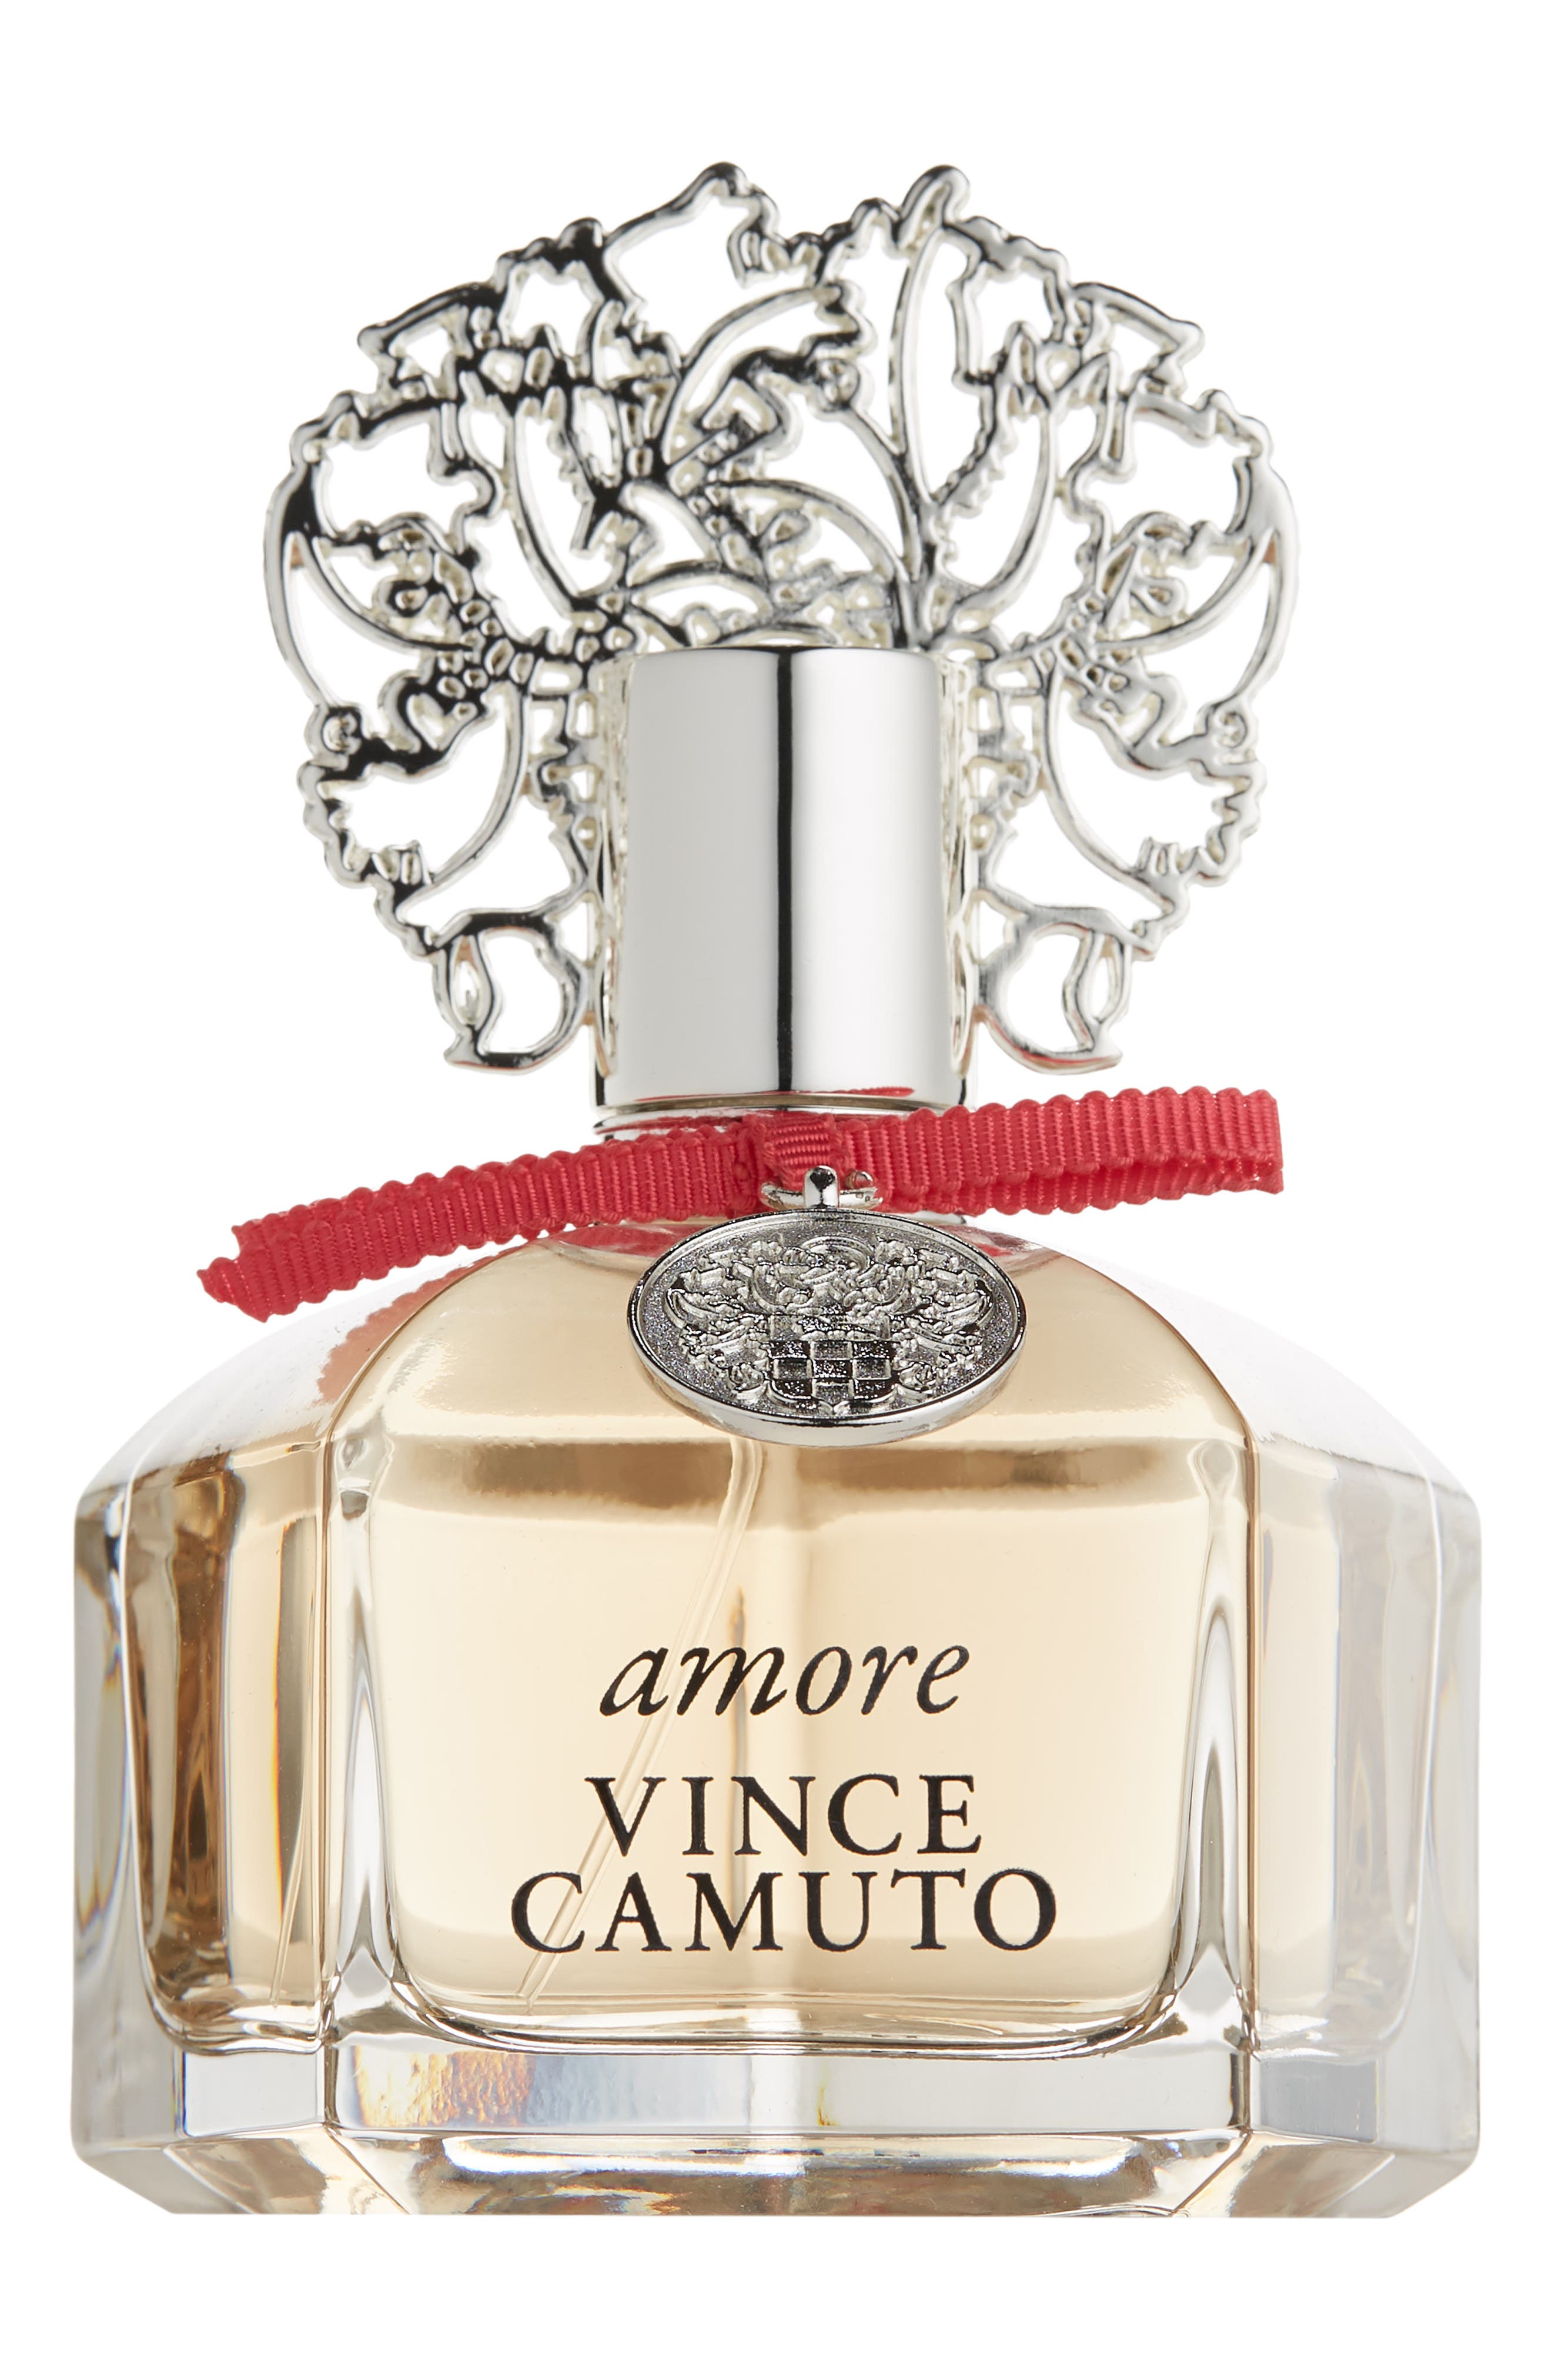 UPC 608940557099 product image for Vince Camuto Amore Vince Camuto Eau De Parfum (Limited Edition), Size - 3.4 oz | upcitemdb.com